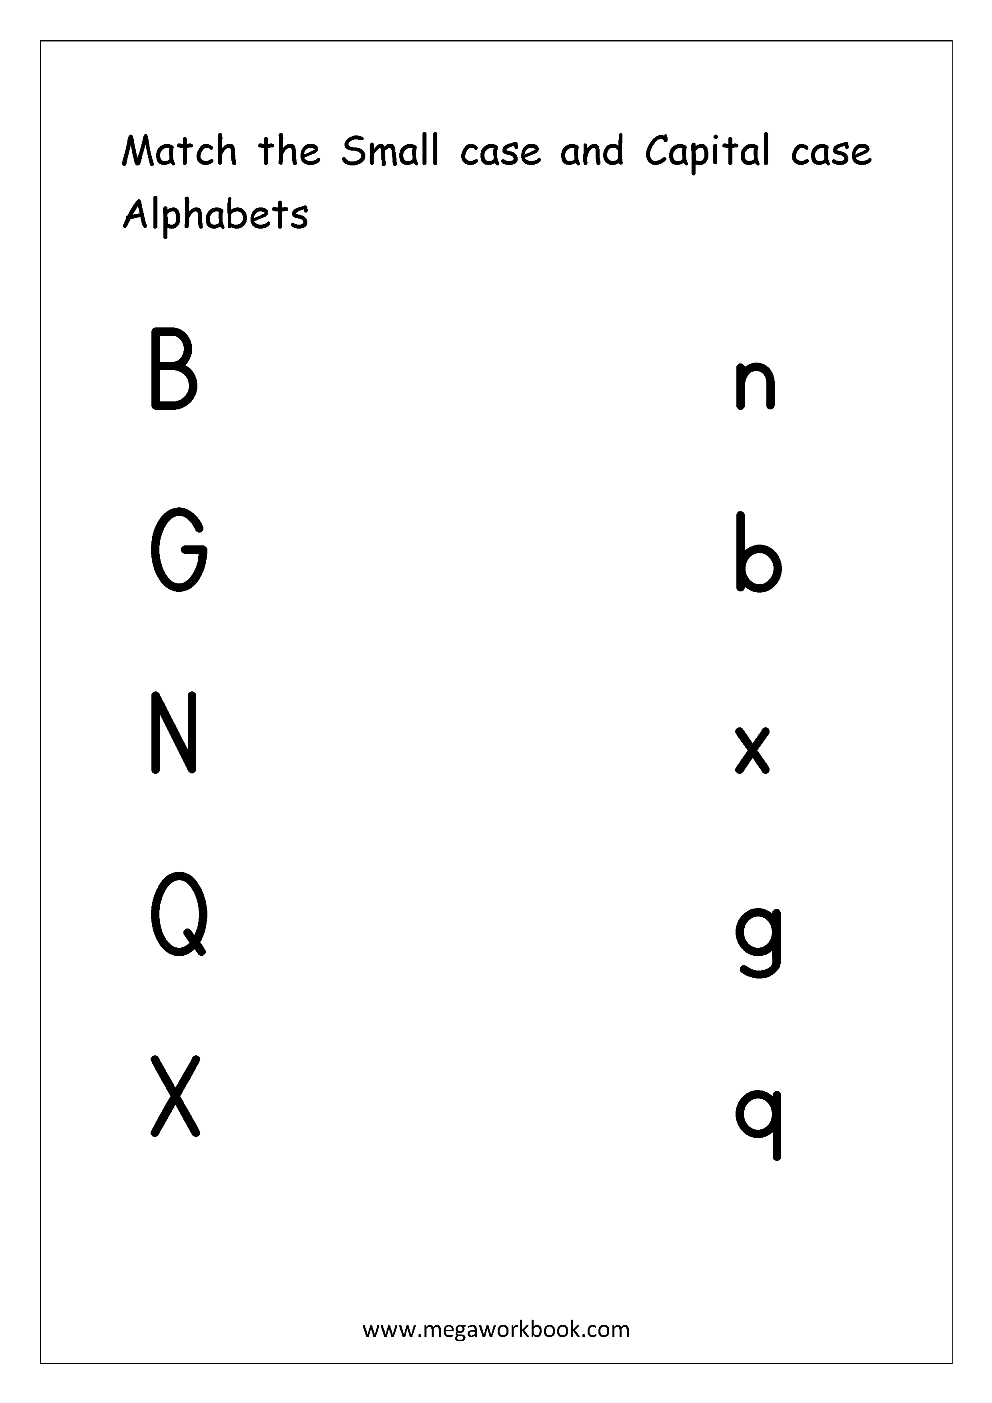 free-english-worksheets-alphabet-matching-megaworkbook